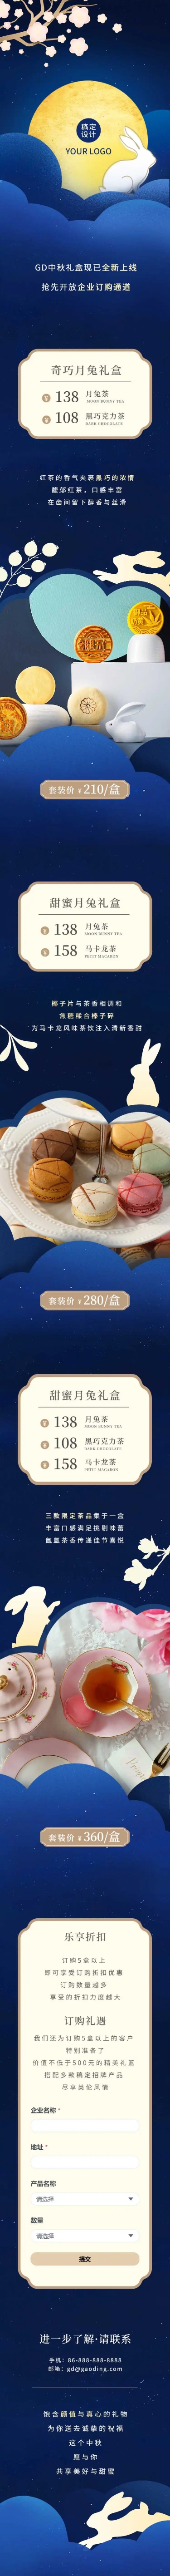 H5长页中秋节月饼产品推广定制企业礼品